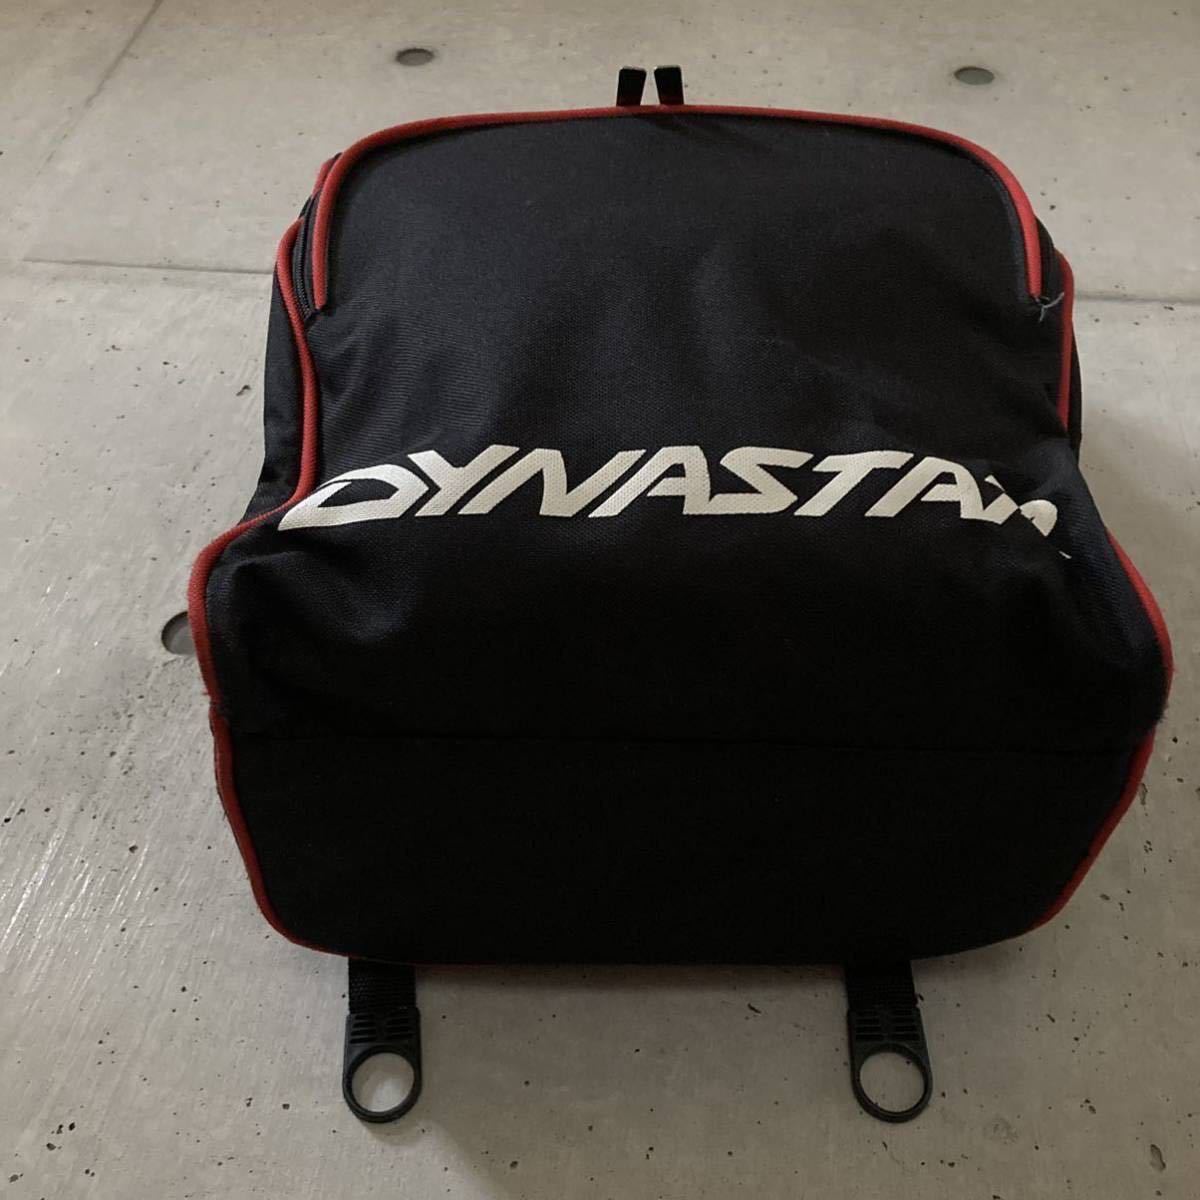 *DYNASTAR ski backpack*tina Star Dyna Star ski rucksack backpack bag ski rucksack black black high capacity translation have!